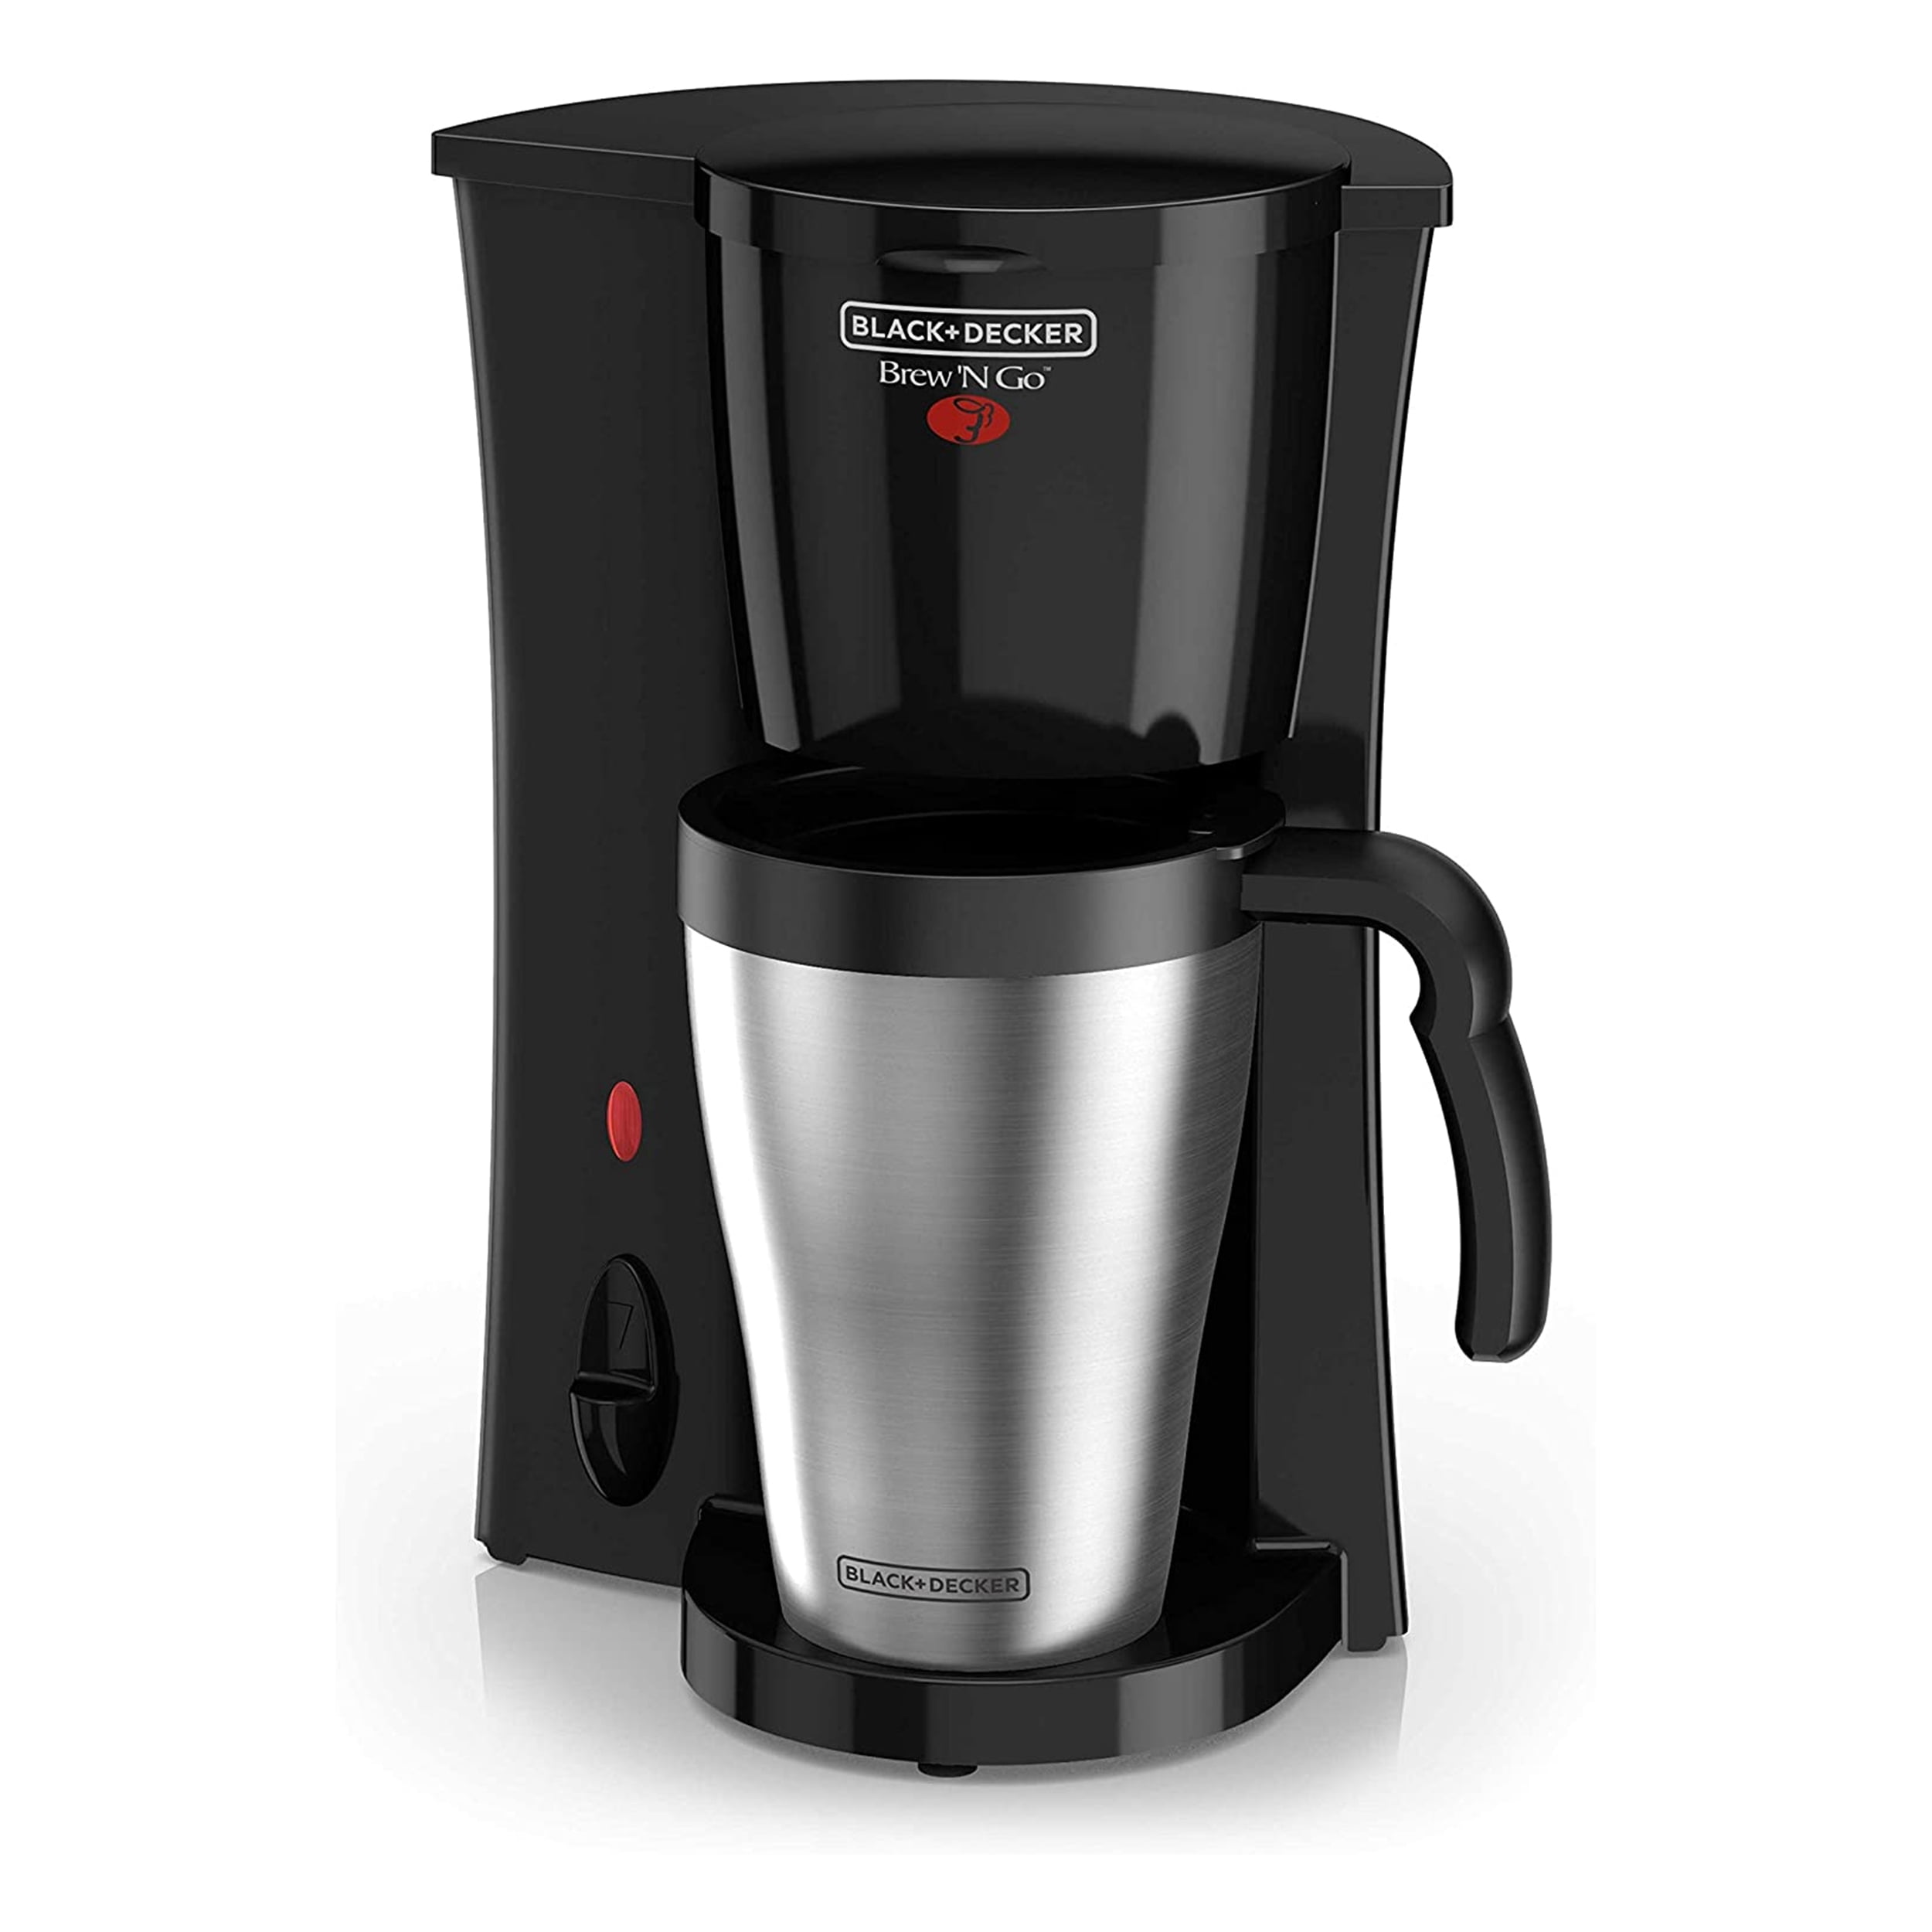 Black & Decker Brew 'N Go Personal Coffeemaker with Stainless Steel Mug 